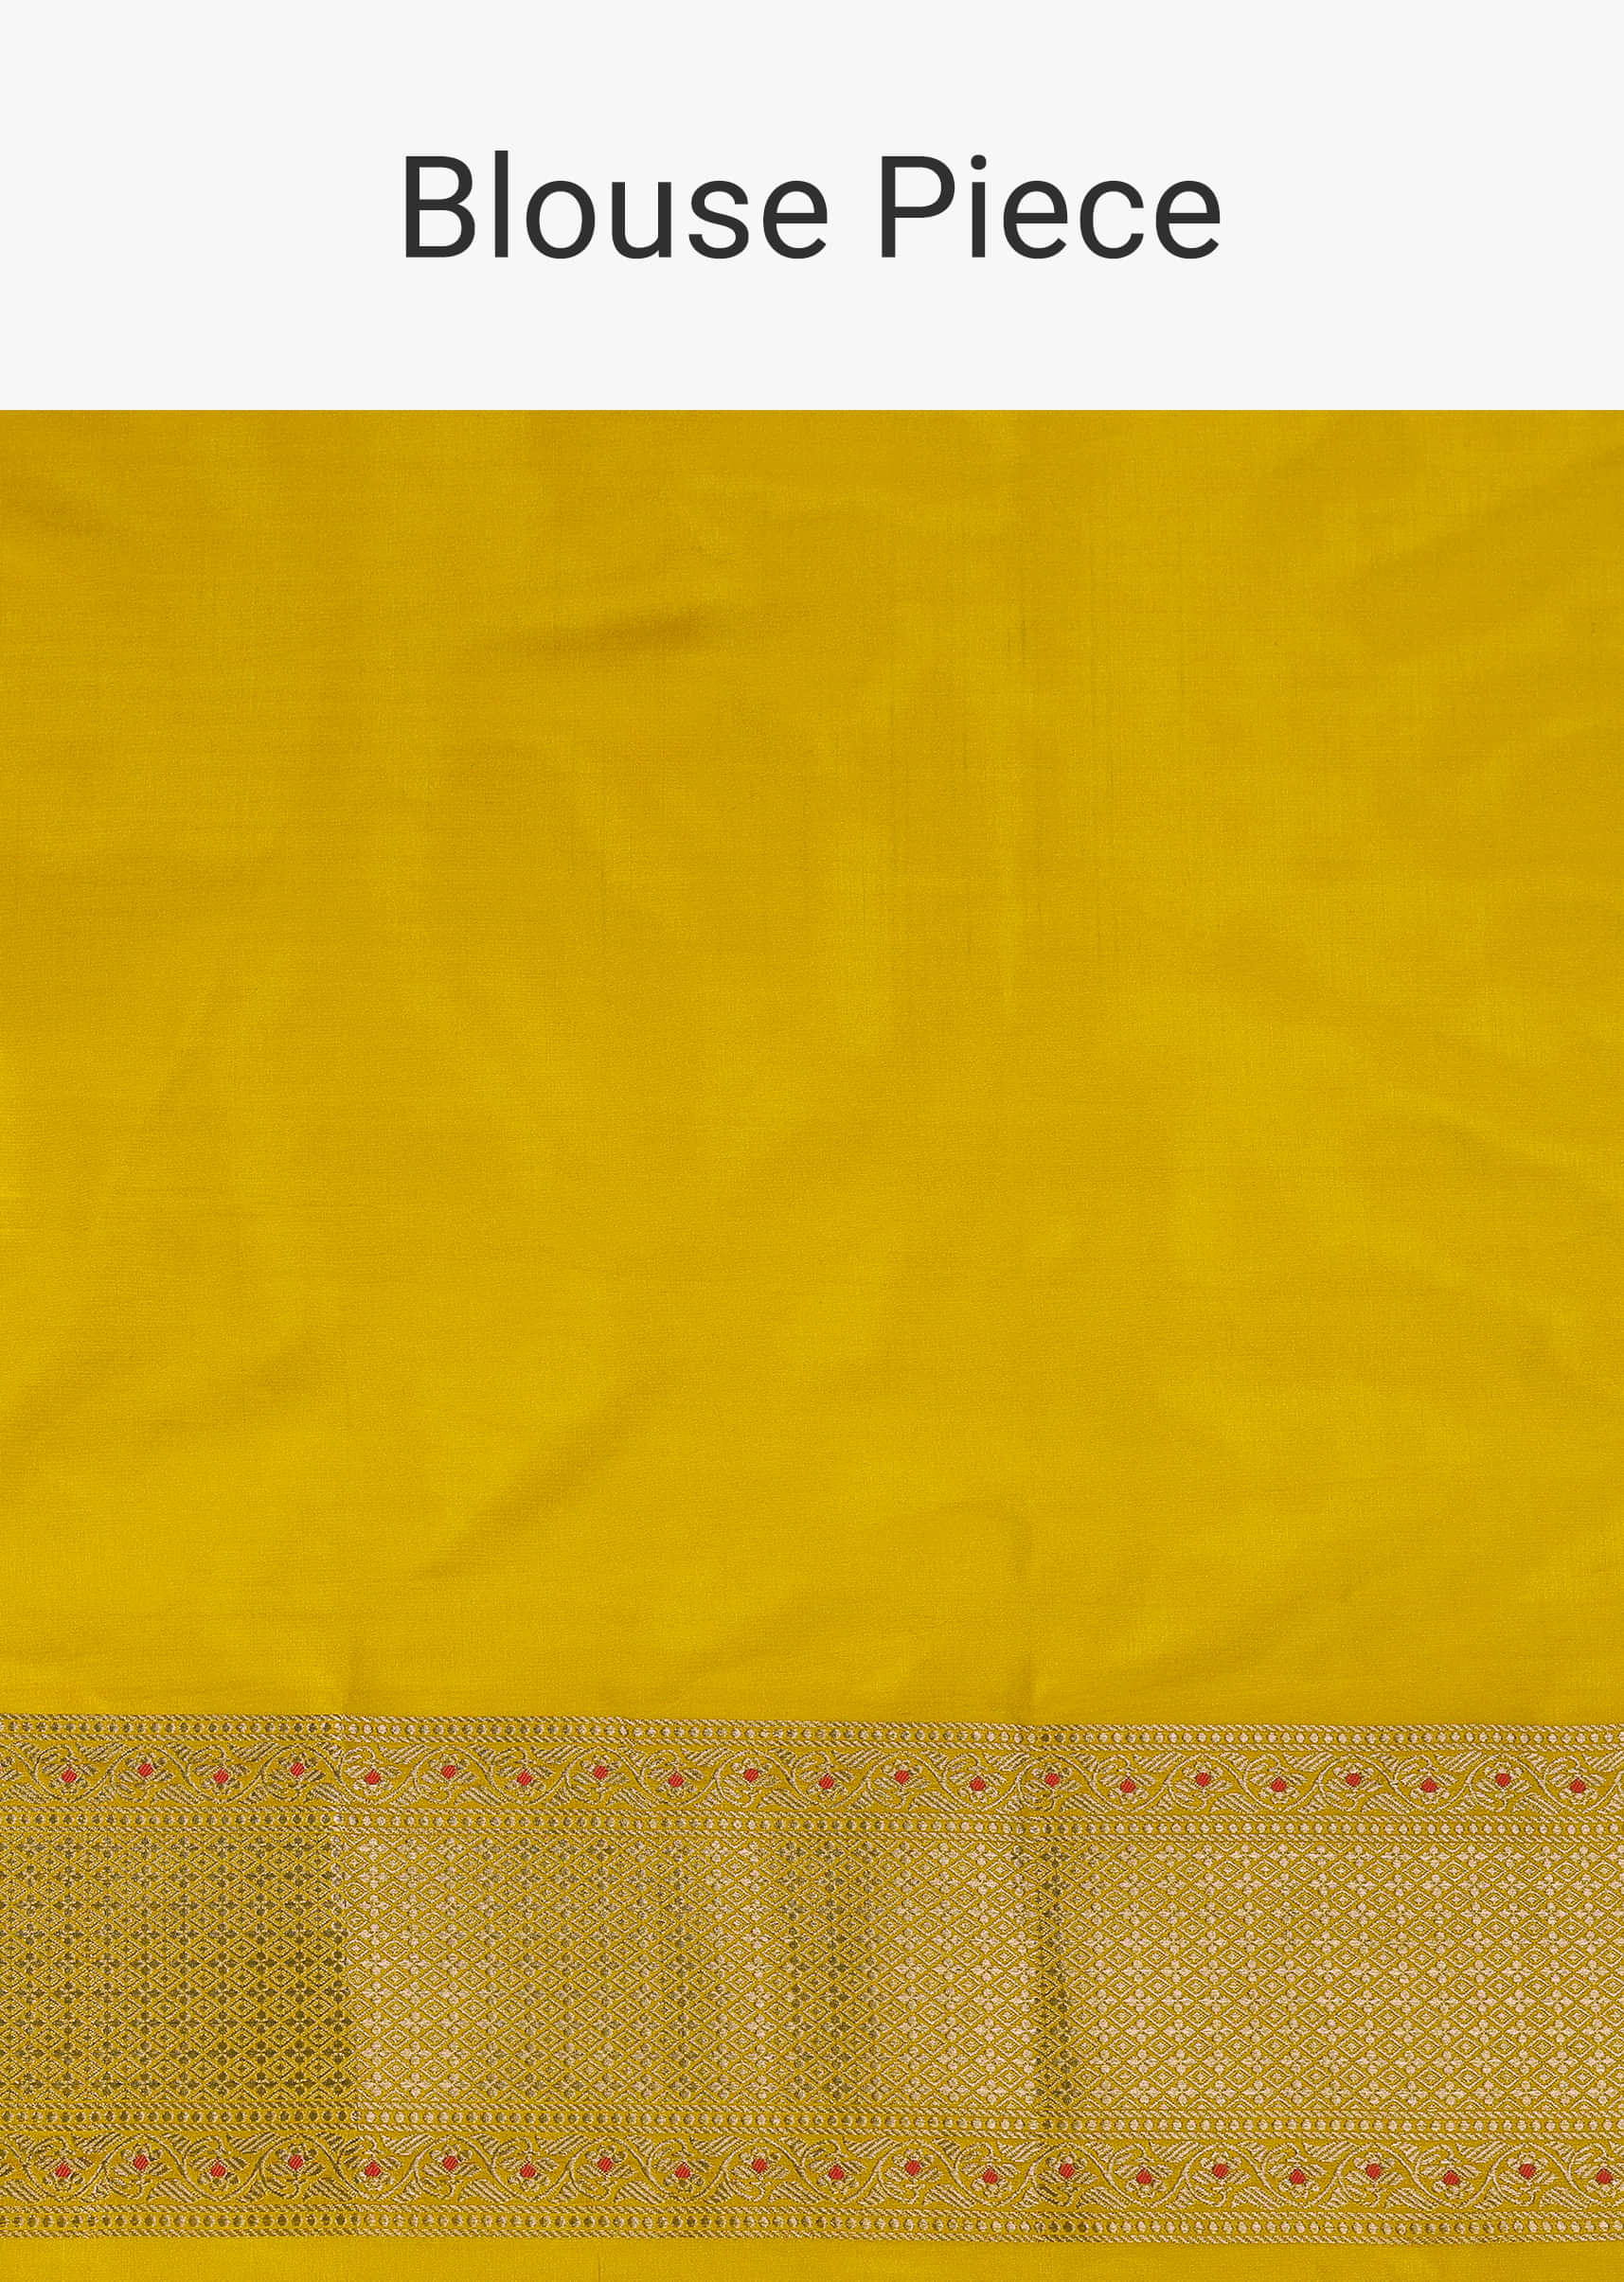 Yellow Handloom Banarasi Saree In Uppada Silk With Meenakari Weave And Unstitched Blouse